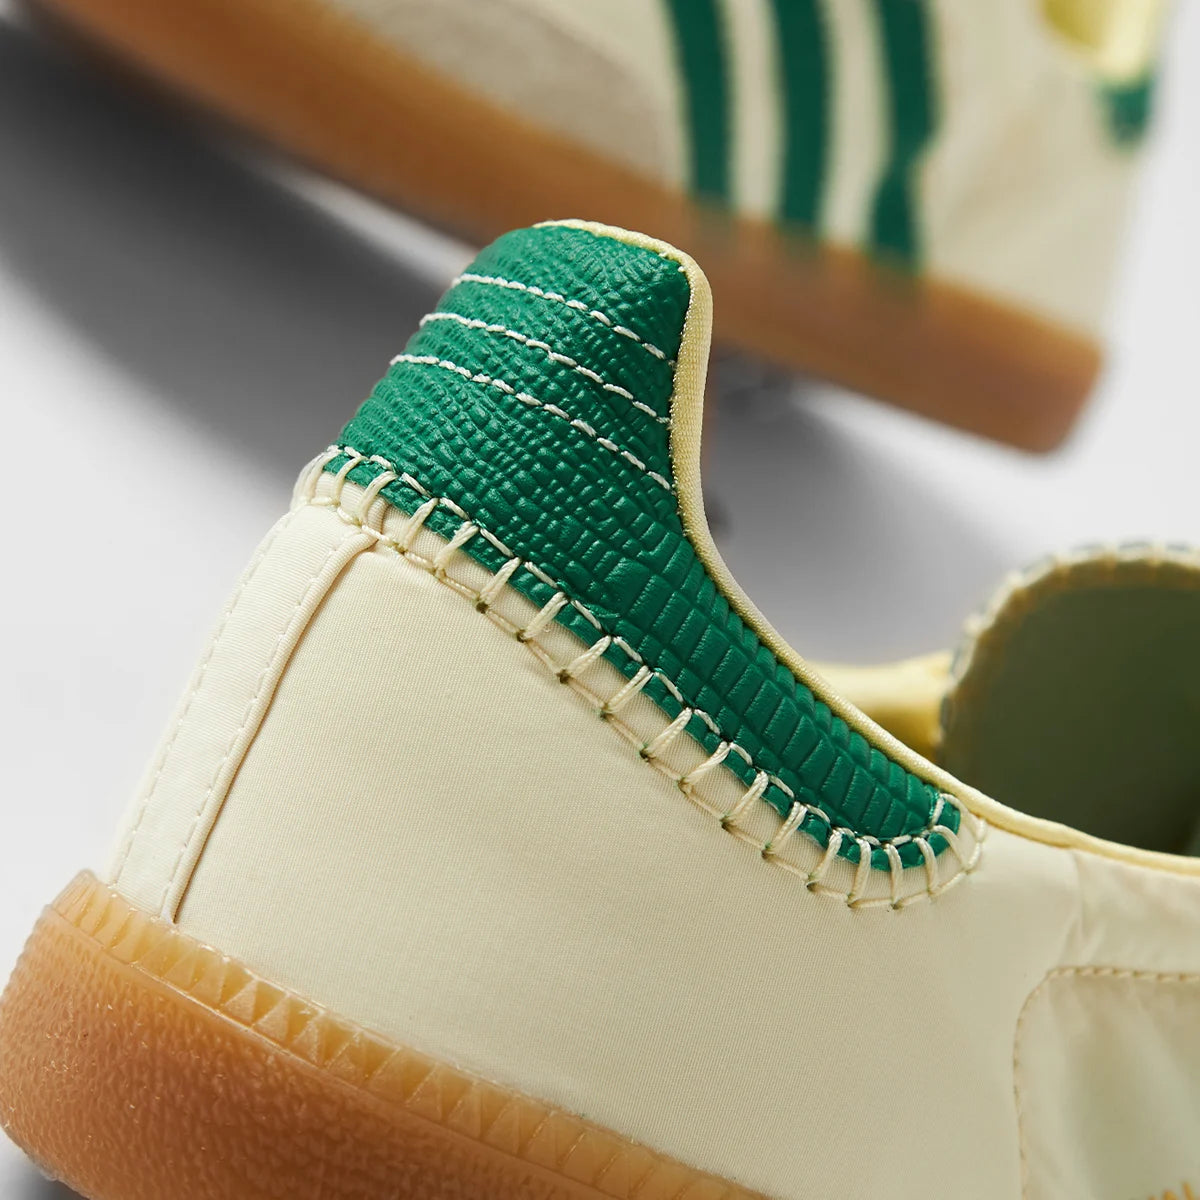 Adidas Samba x 
Wales Bonner "Cream Green"